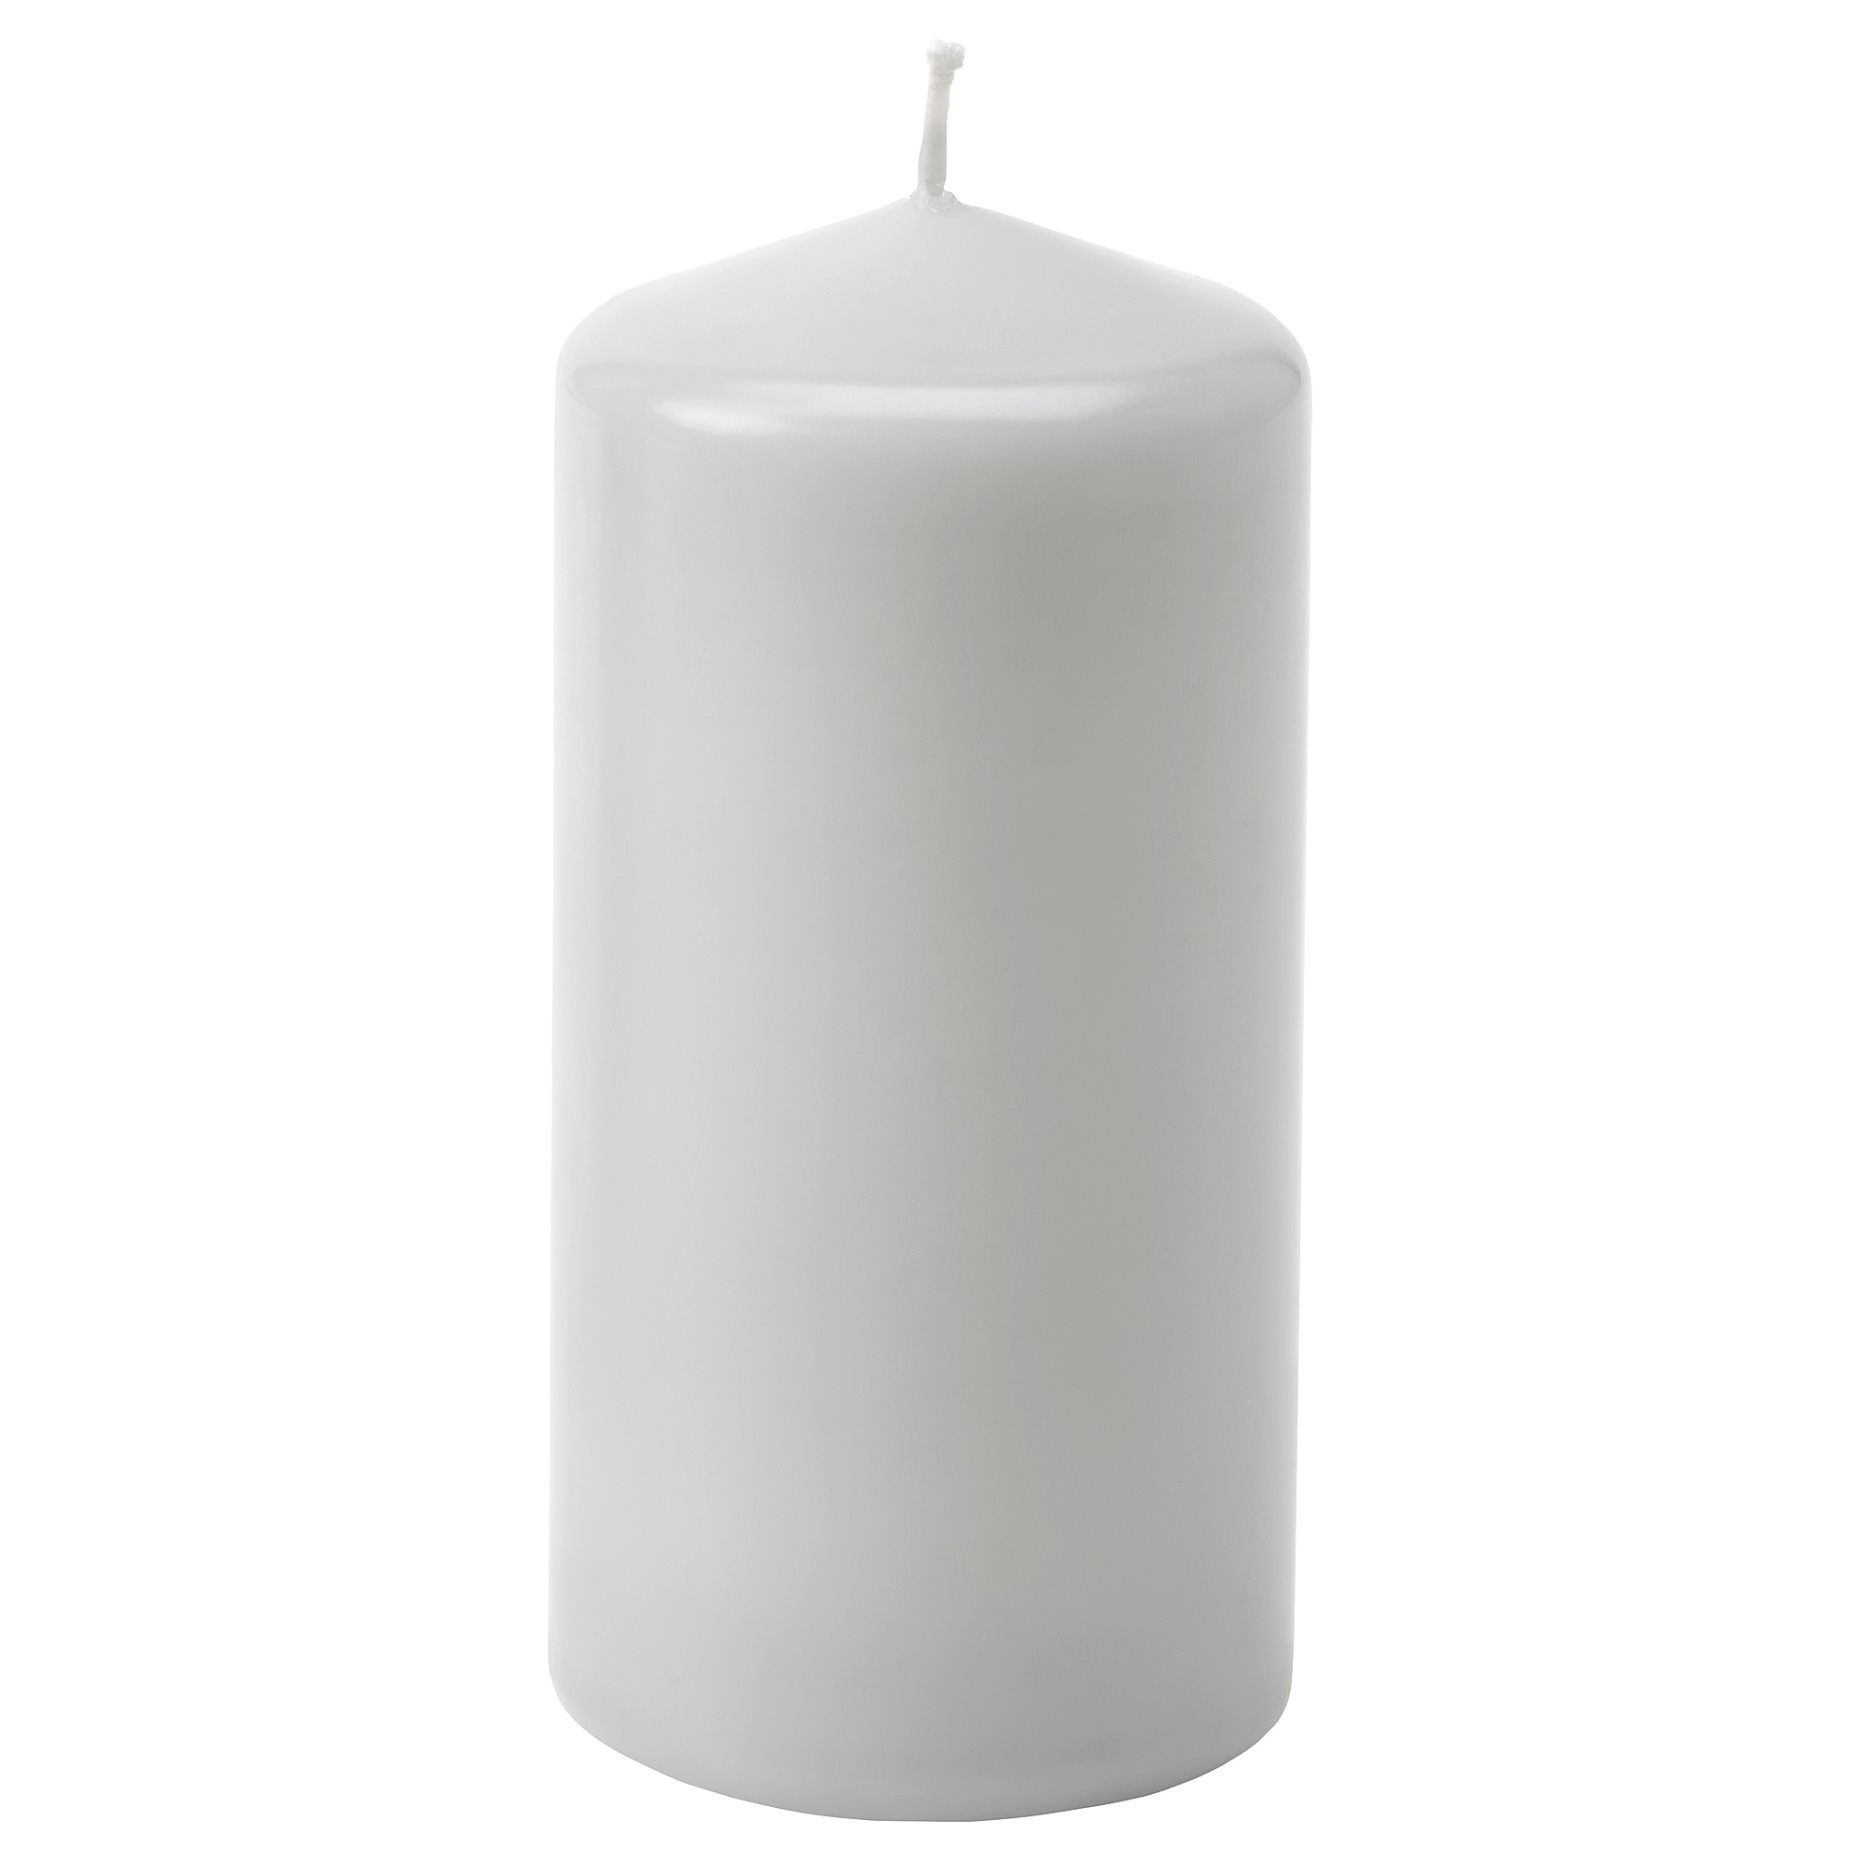 DAGLIGEN, unscented pillar candle, 14 cm, 005.381.28